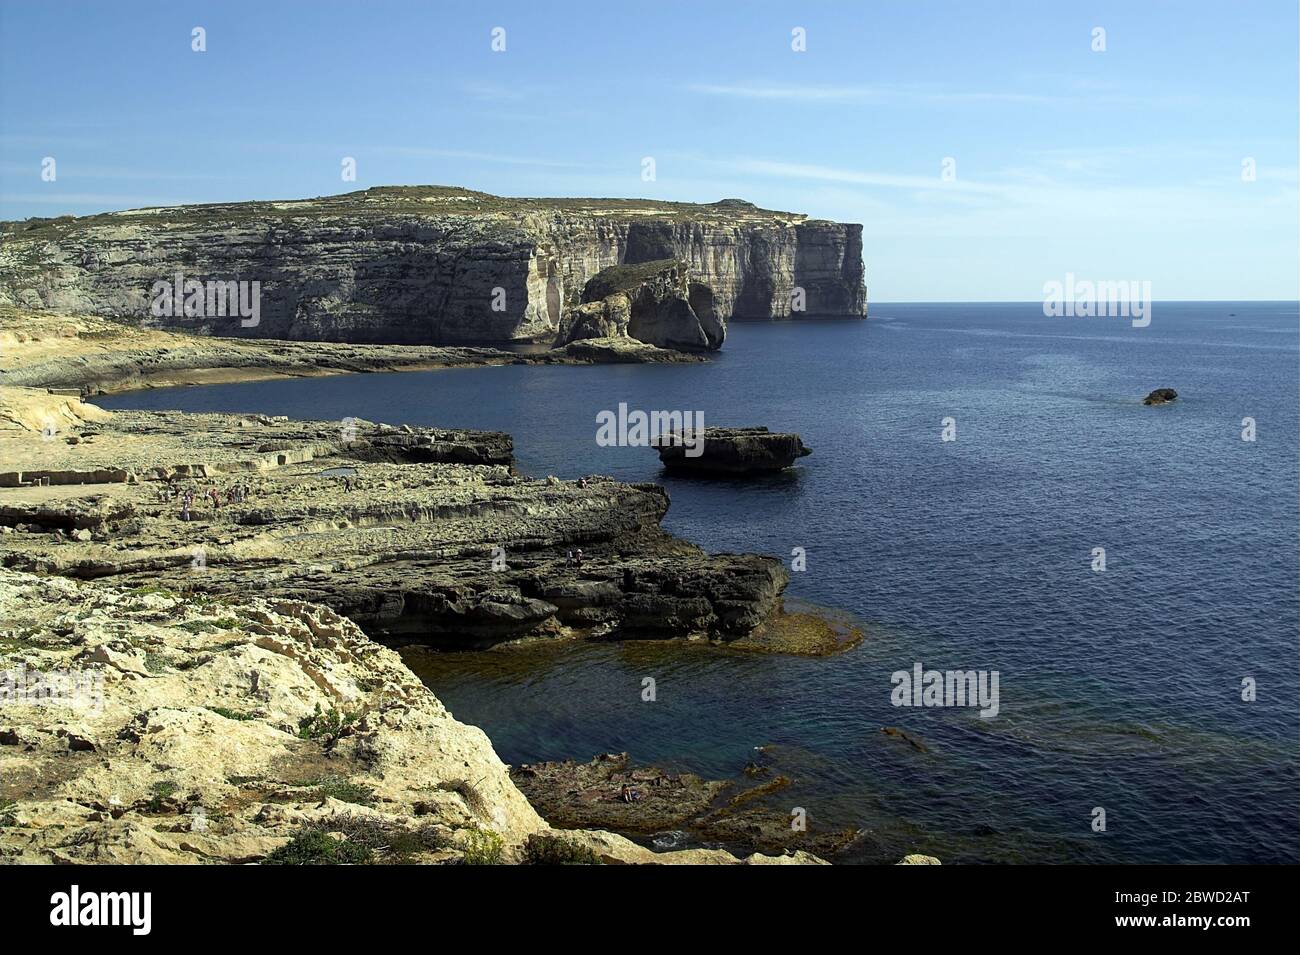 Malta Gozo Coastal cliffs in Dwejra Bay. Küstenklippen in Dwejra Bay.  Acantilados costeros en la bahía de Dwejra. Nadmorskie klify 馬耳他，戈佐島，在德韋拉灣的沿海懸崖 Stock Photo